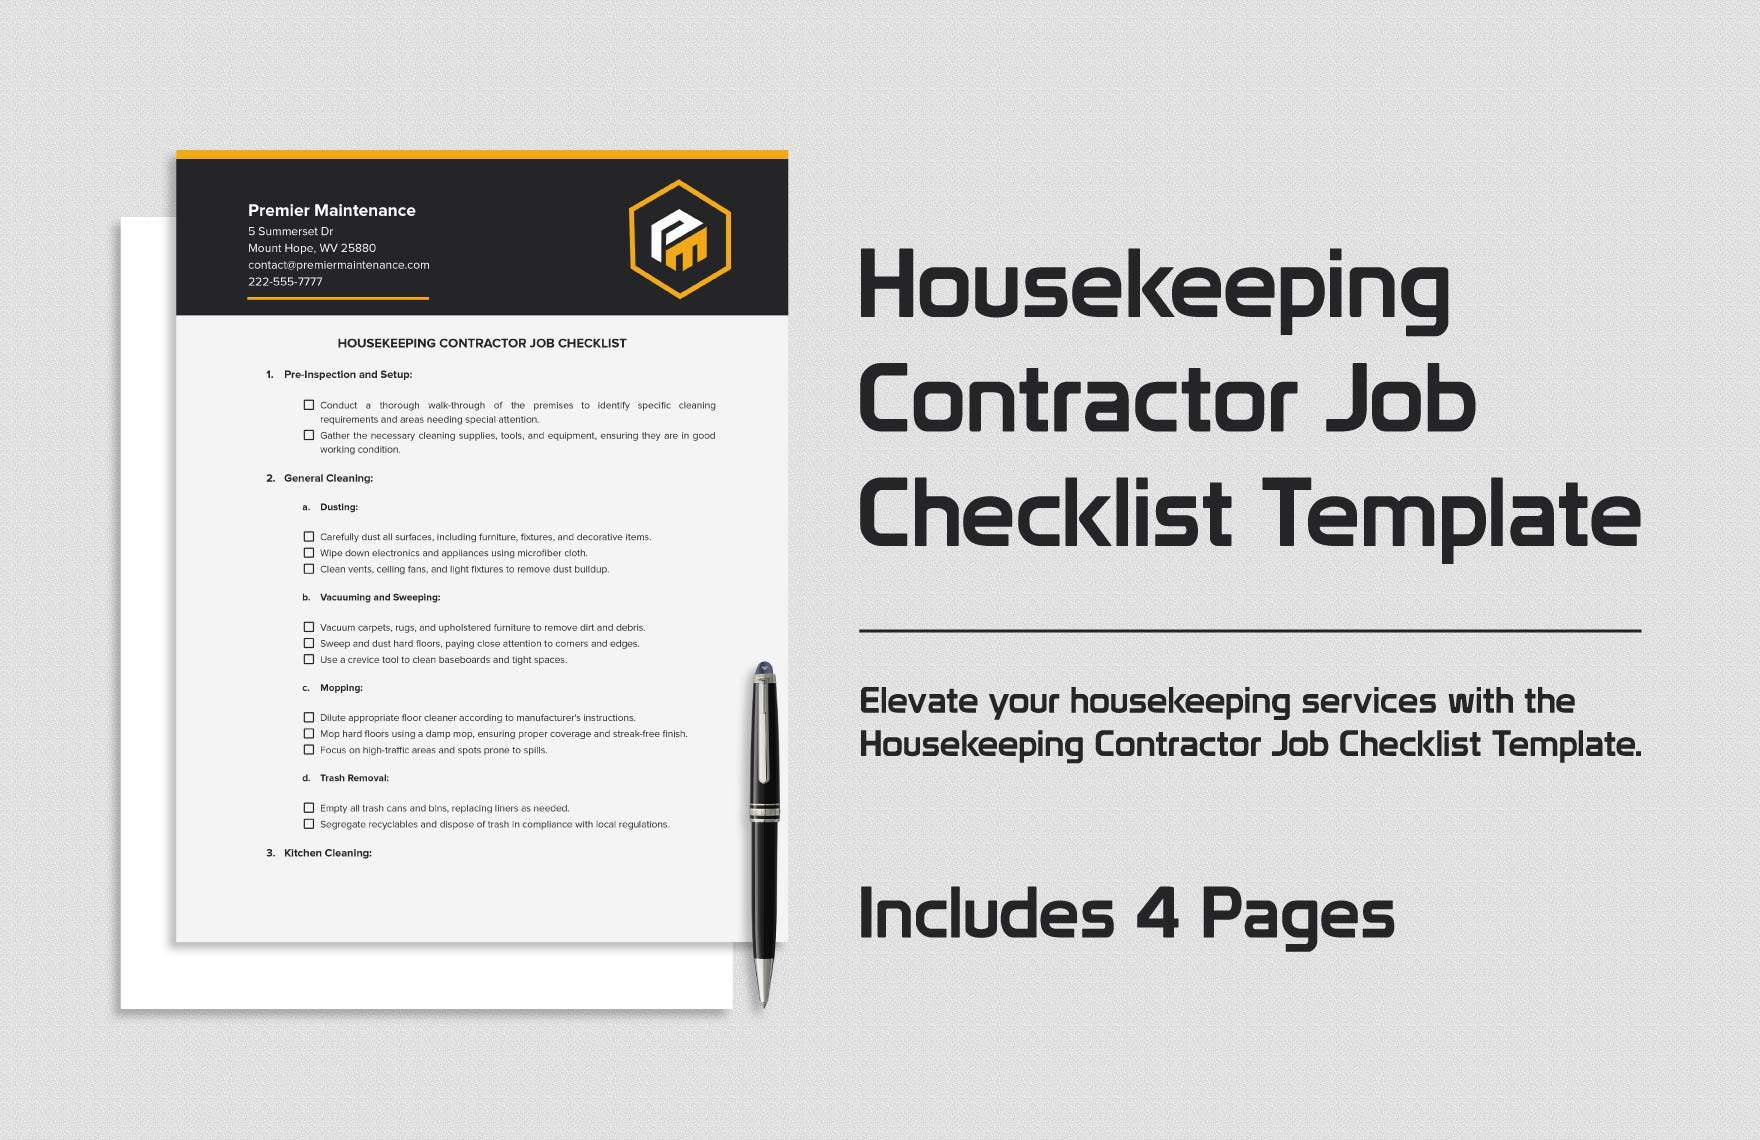 Housekeeping Contractor Job Checklist Template